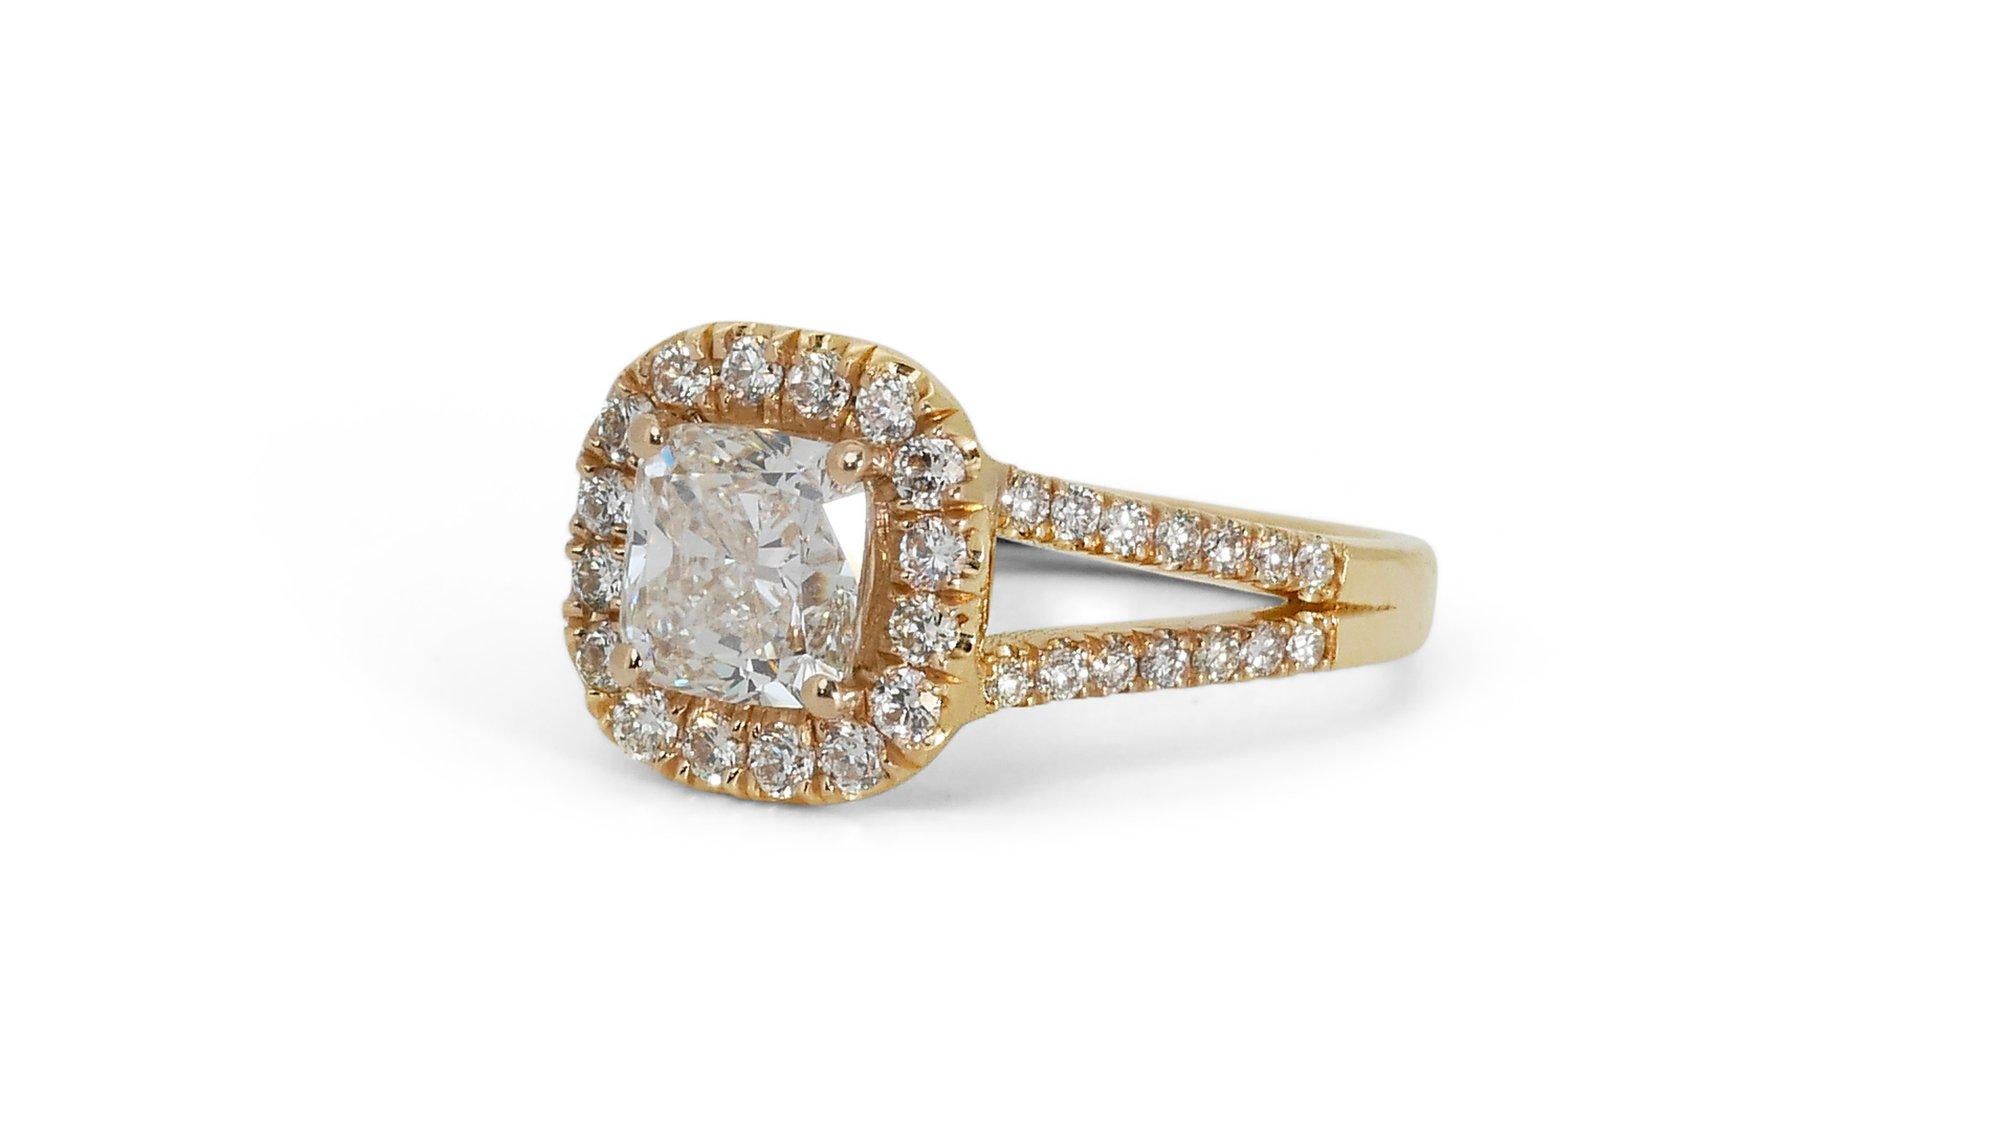 Ravishing 18k Yellow Gold Halo Ring w/ 2.05 ct Natural Diamonds IGI Cert For Sale 1